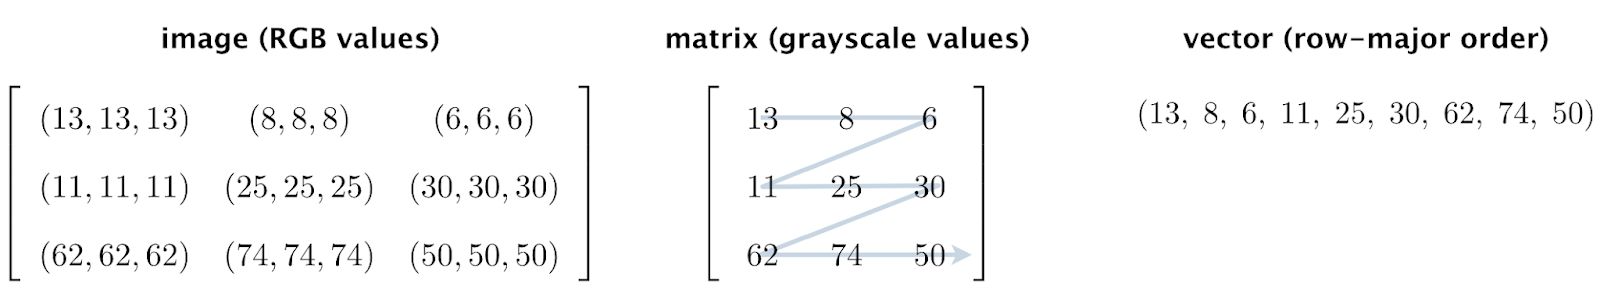 3 pixel by 3 pixel image to matrix to vector